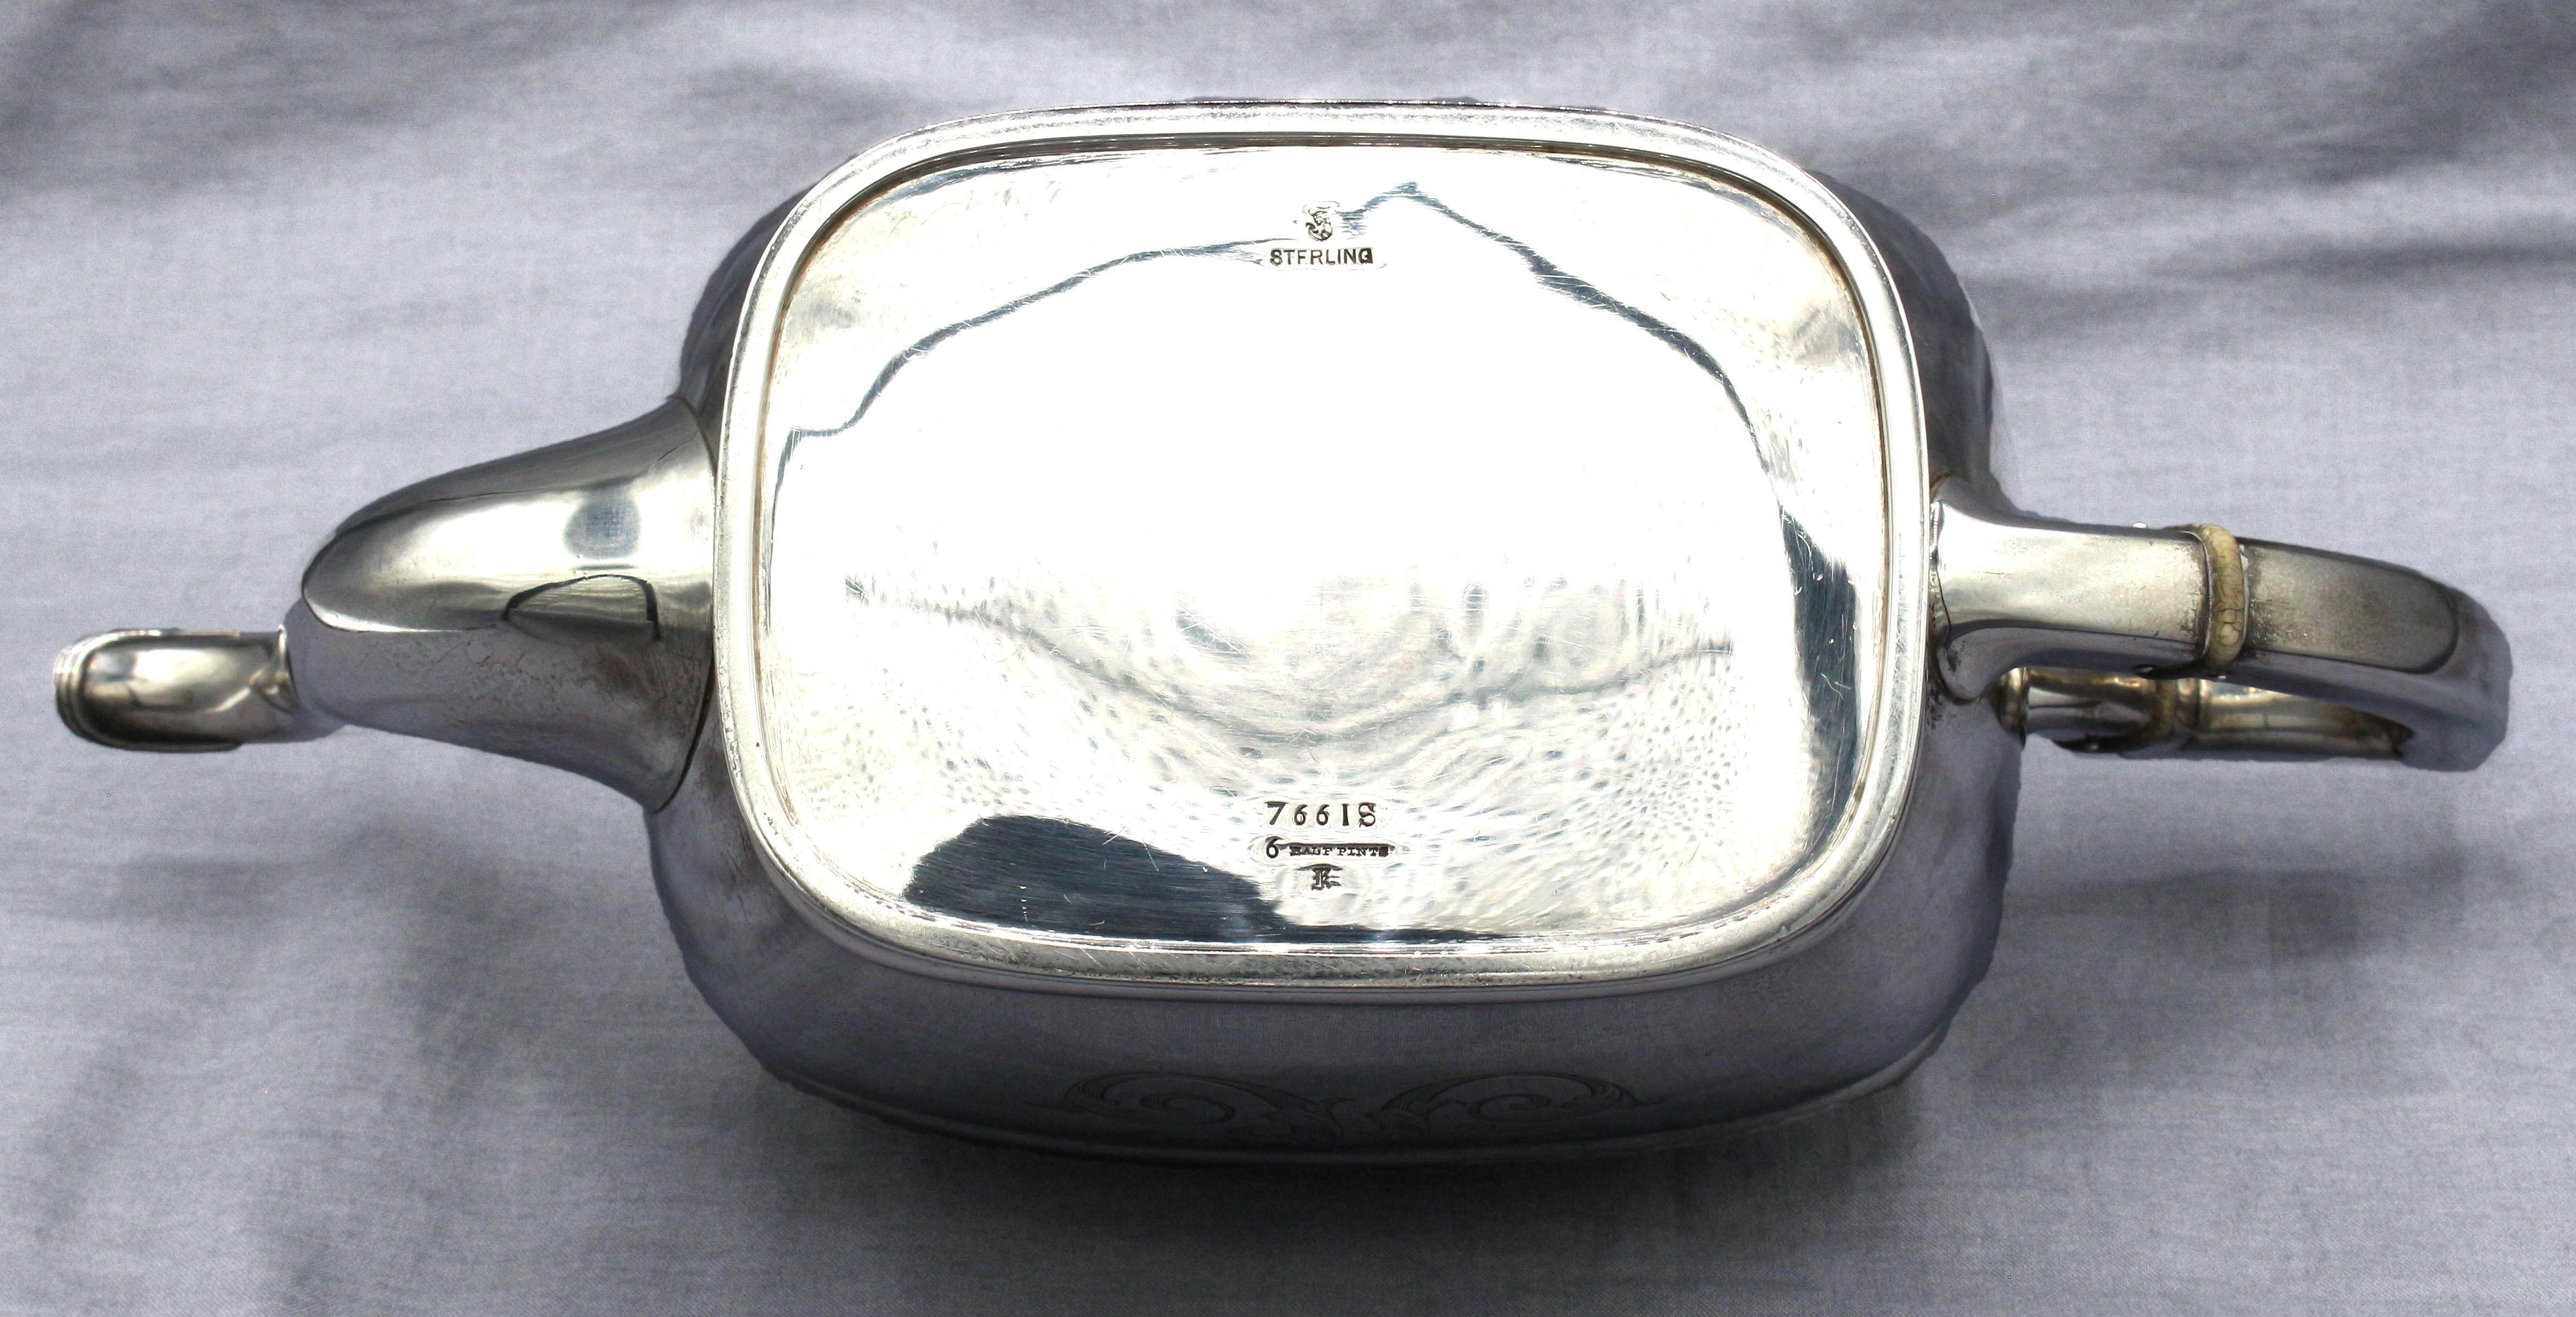 Georgian Sterling Silver 3-Piece Tea Set by Towle, circa 1900-30